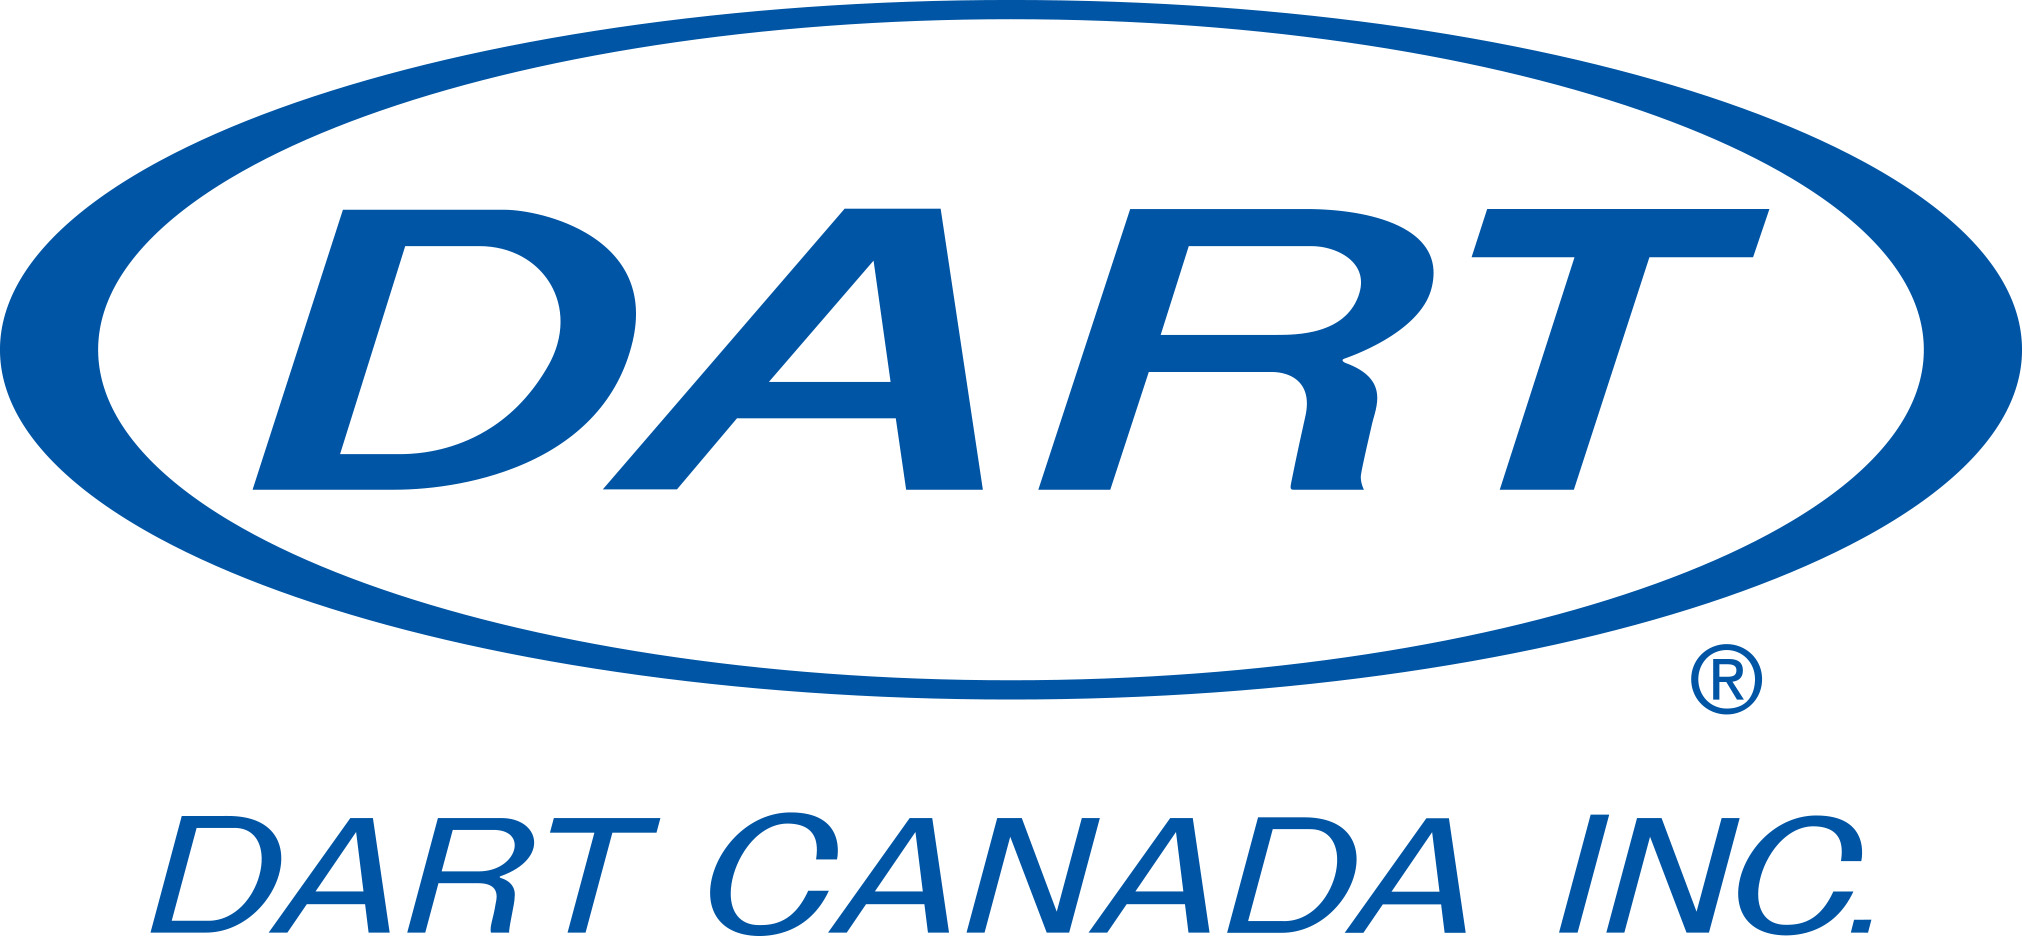 Dart Canada Inc. Logo